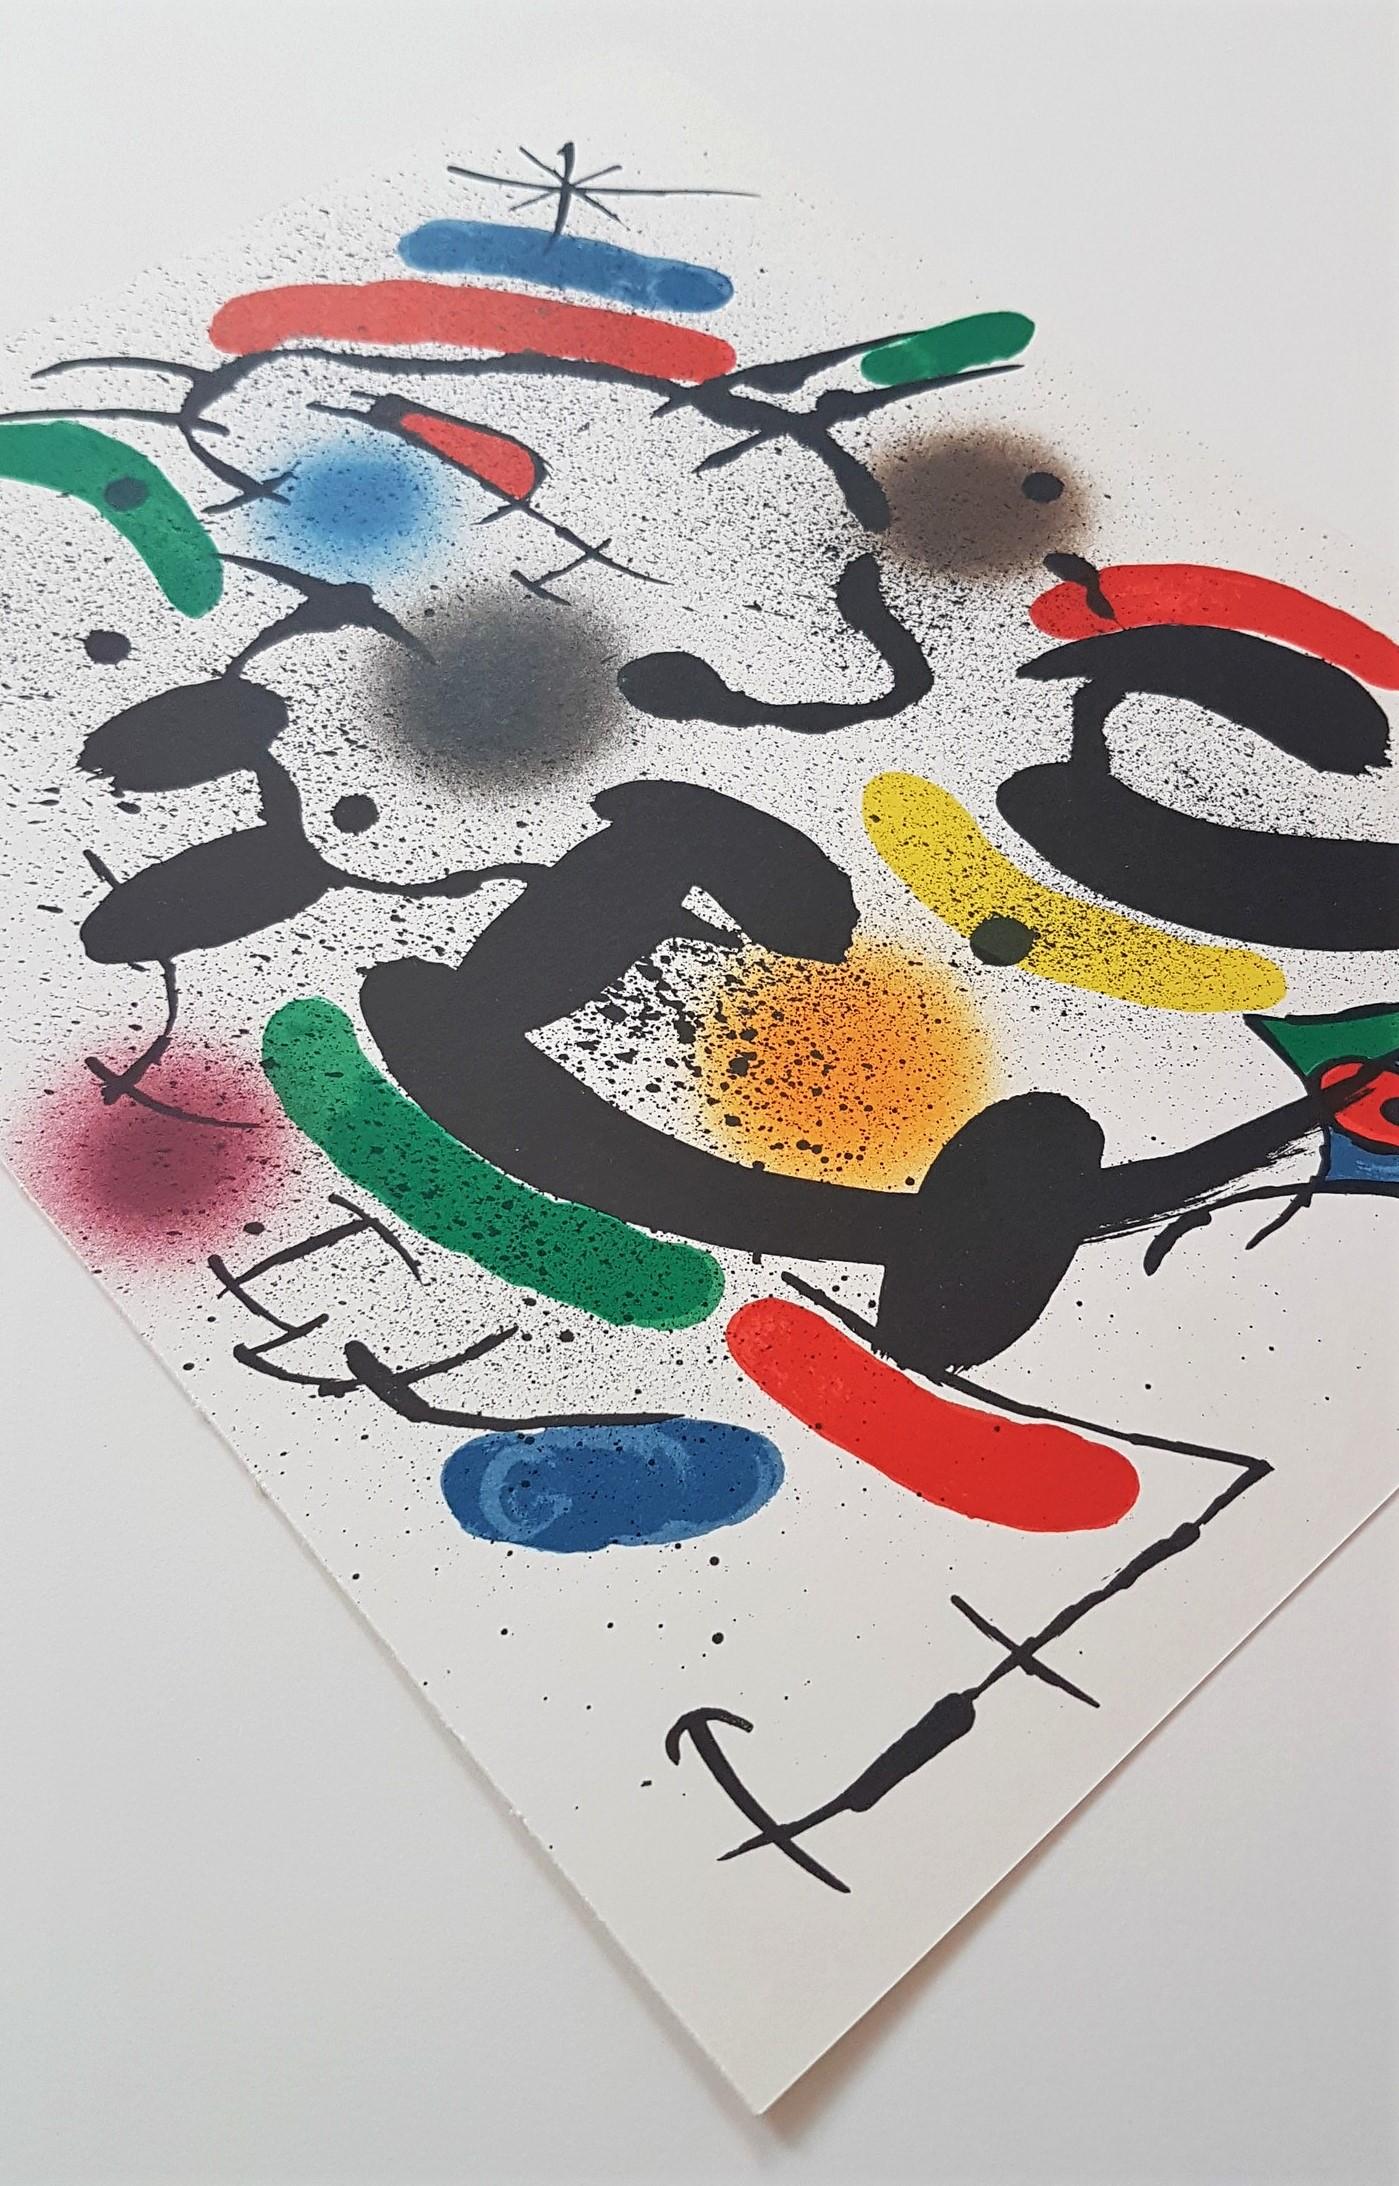 Joan Miró
Litografia Original VI
Color Lithograph
Year: 1975
Size: 12.5 × 9.6 inches
Catalogue Raisonné: Queneau, Miro Lithographe II, 1952-1963, p.37
Publisher: Maeght Editeur, Paris, France 
Verso: Typographically annotated: 'Joan Miro -